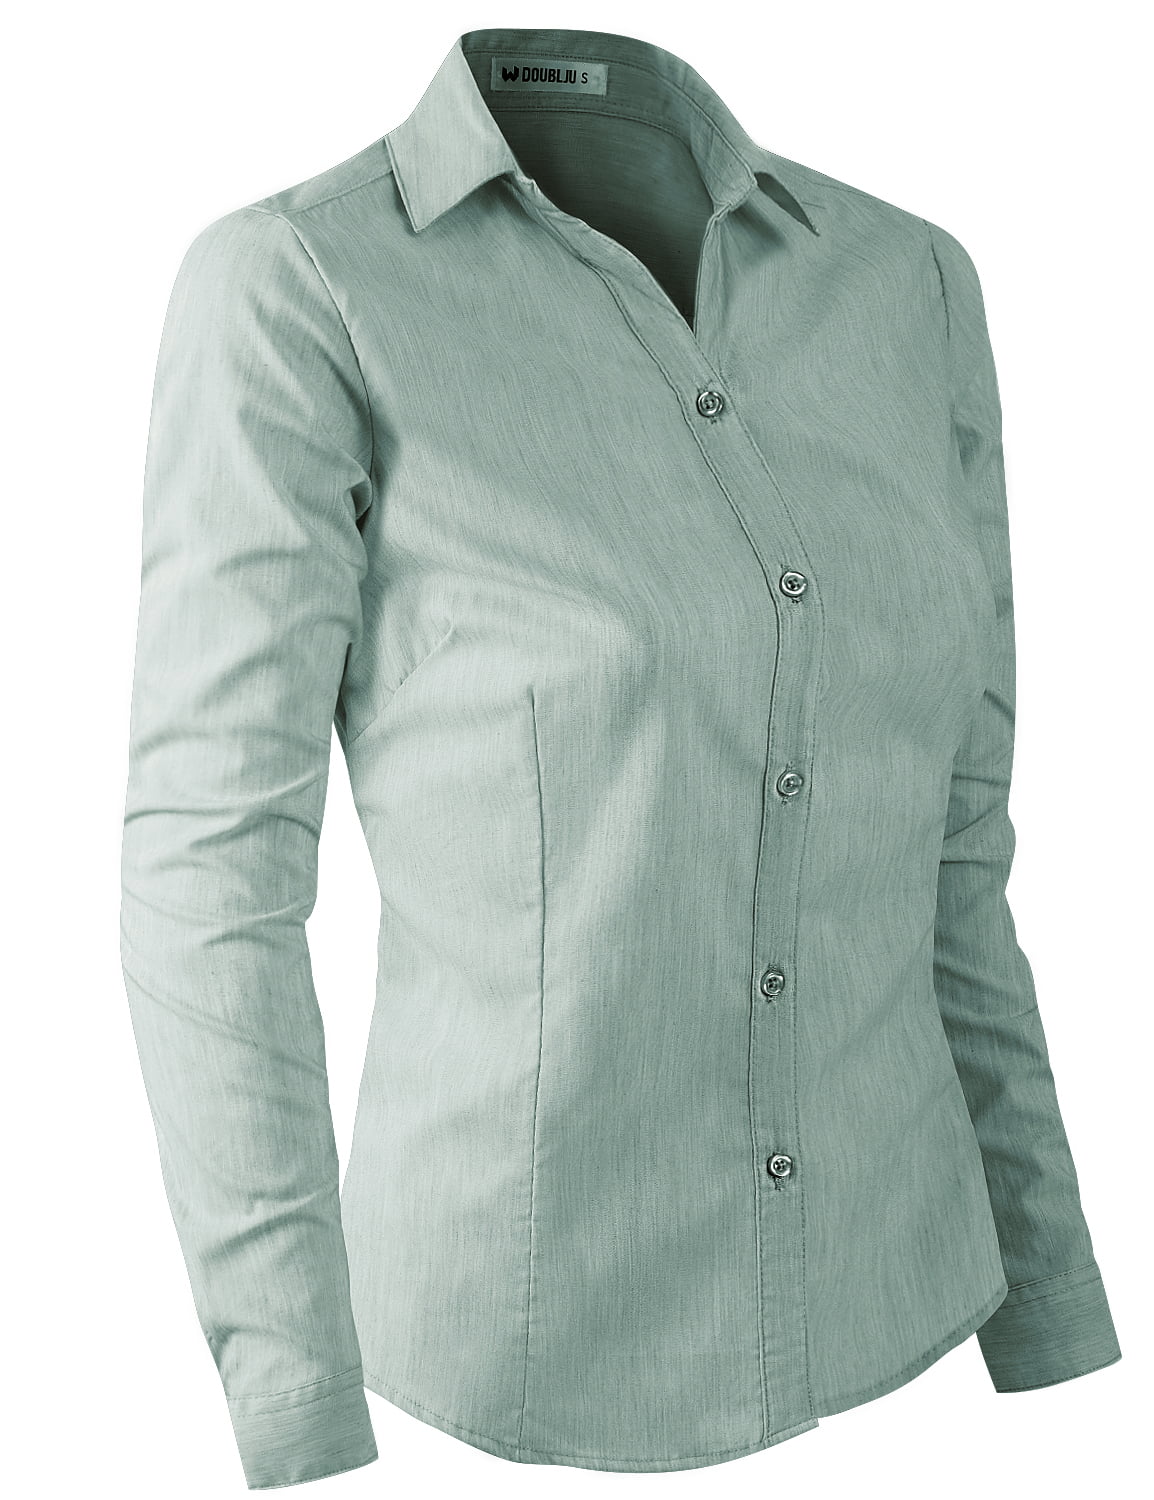 Doublju Women's Long Sleeve Slim Fit Button Down Dress Shirt (Plus